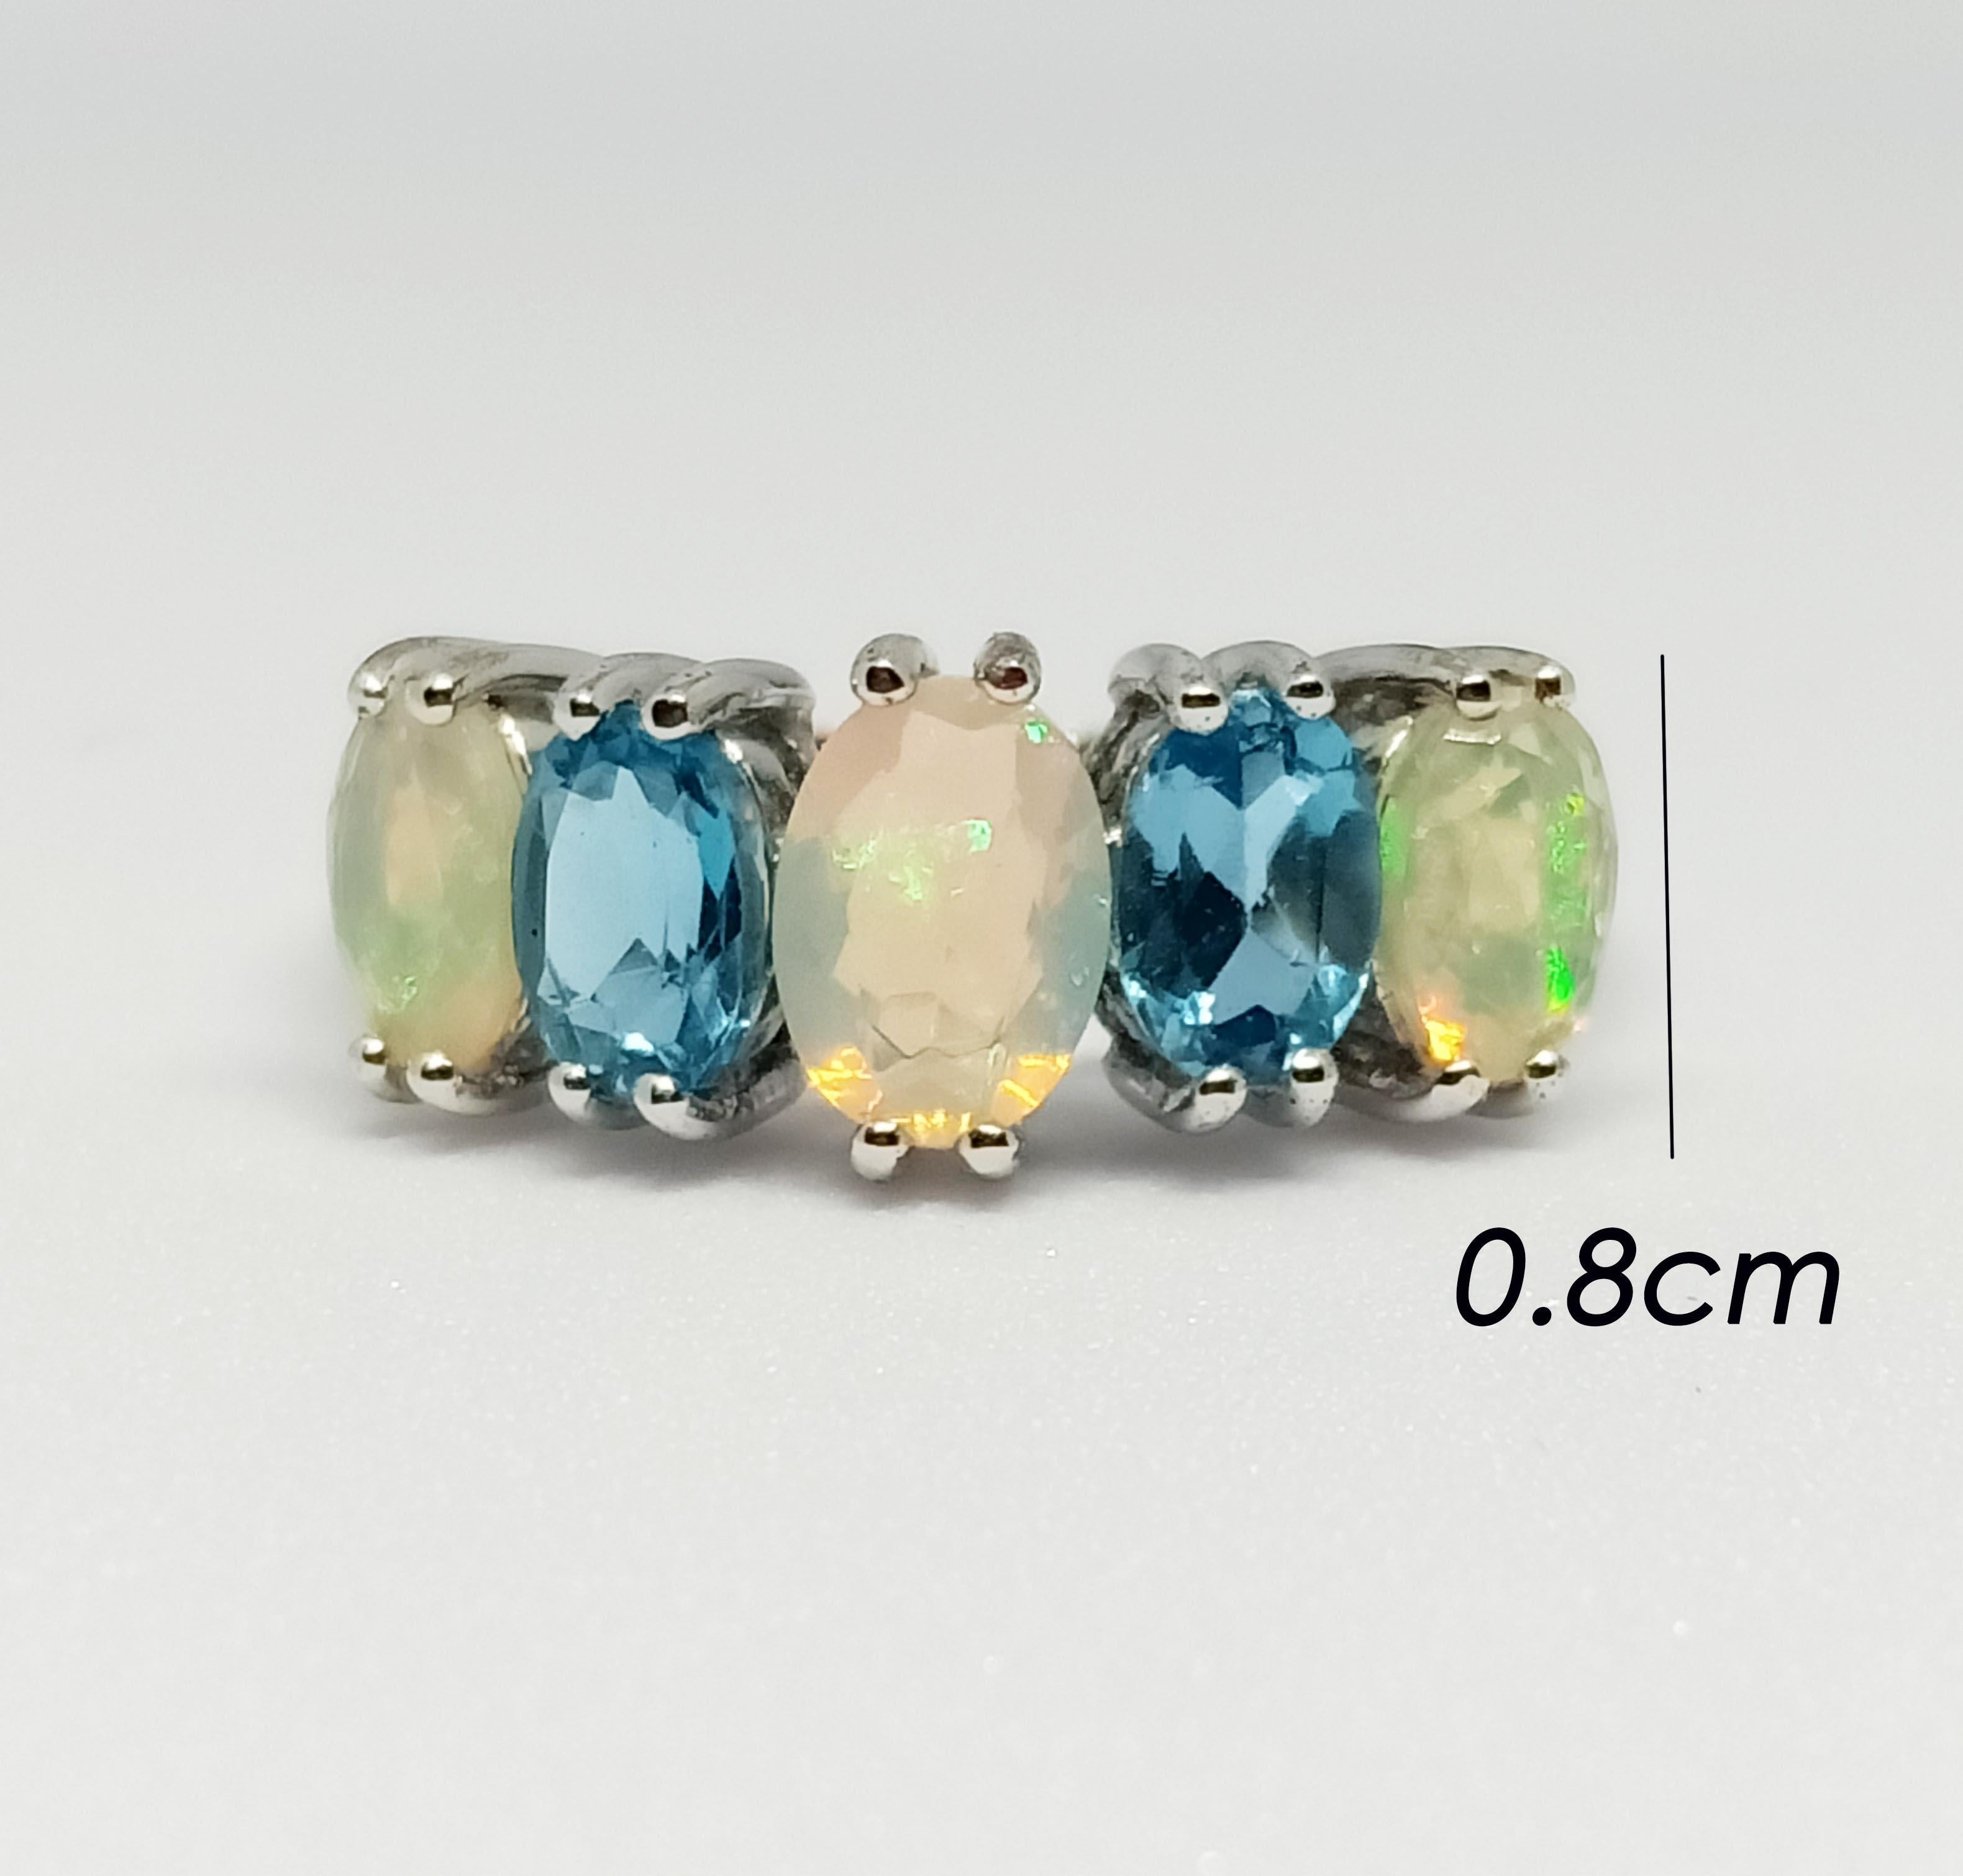 Opal oval 7x5 mm. 1 pcs.
Opal oval 6x4 mm. 2 pcs.
blue topaz 6x4 mm. 2 pcs.
18K white gold Plated over sterling silver
